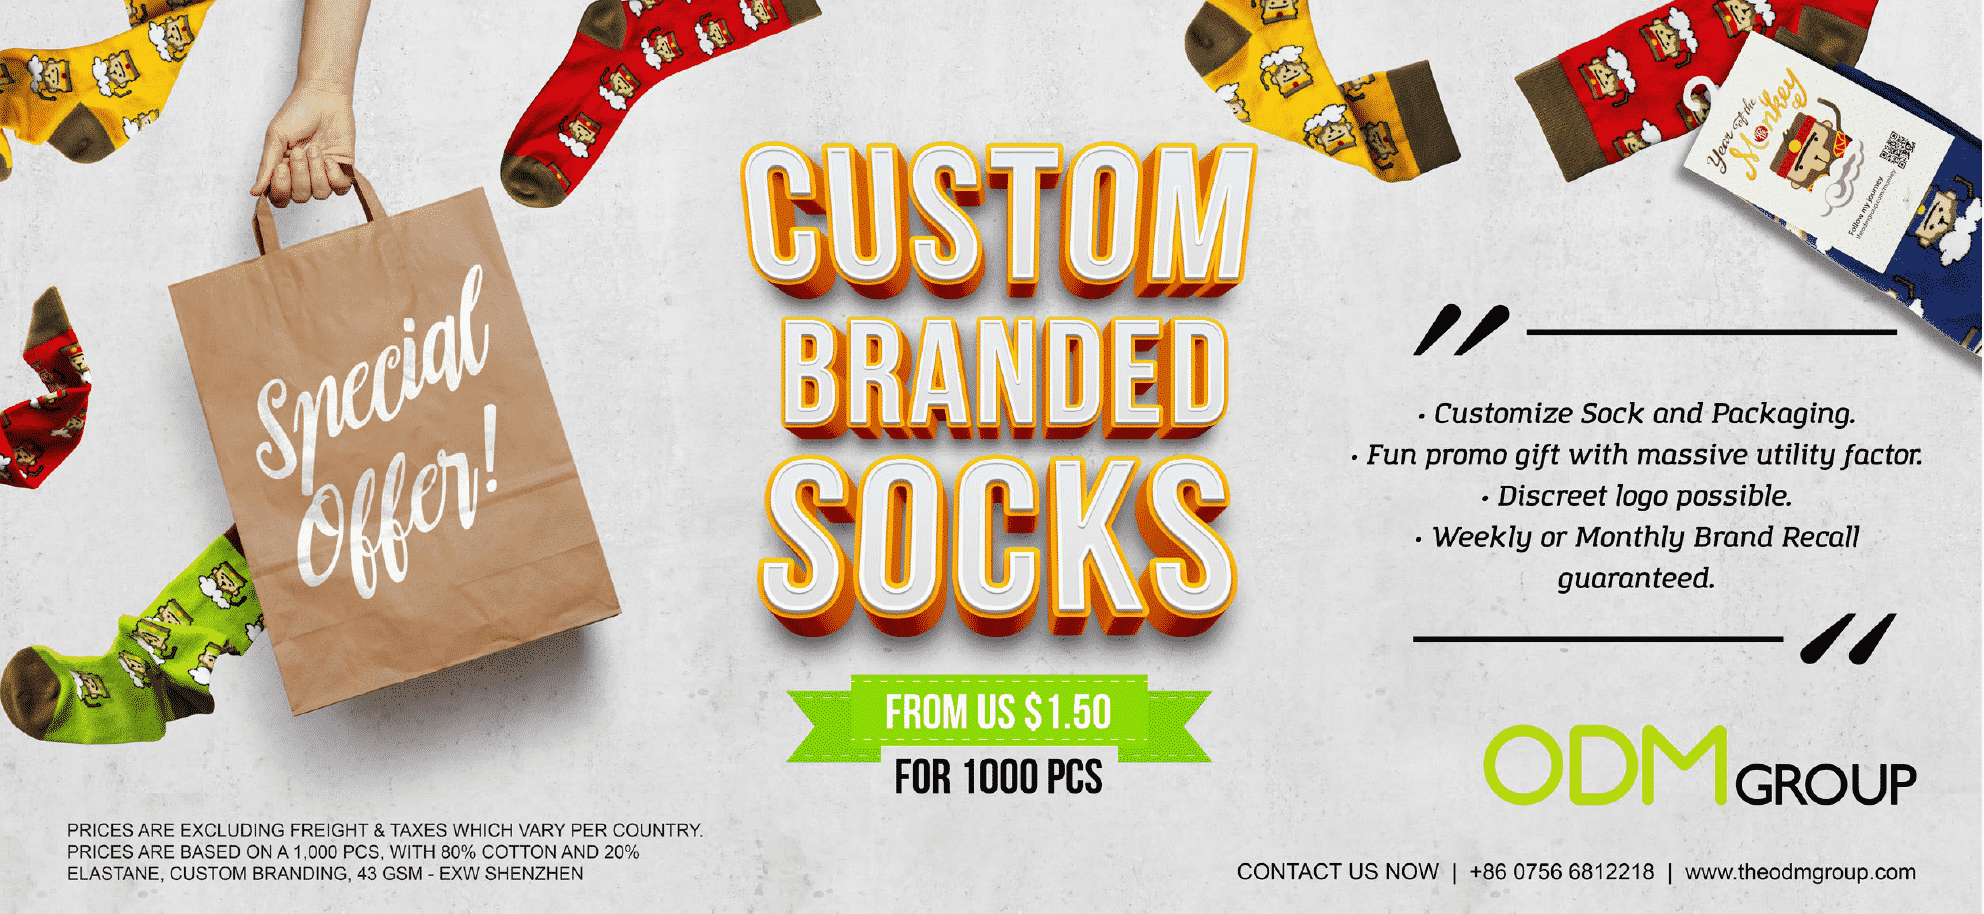 Custom Branded Socks Special Offer